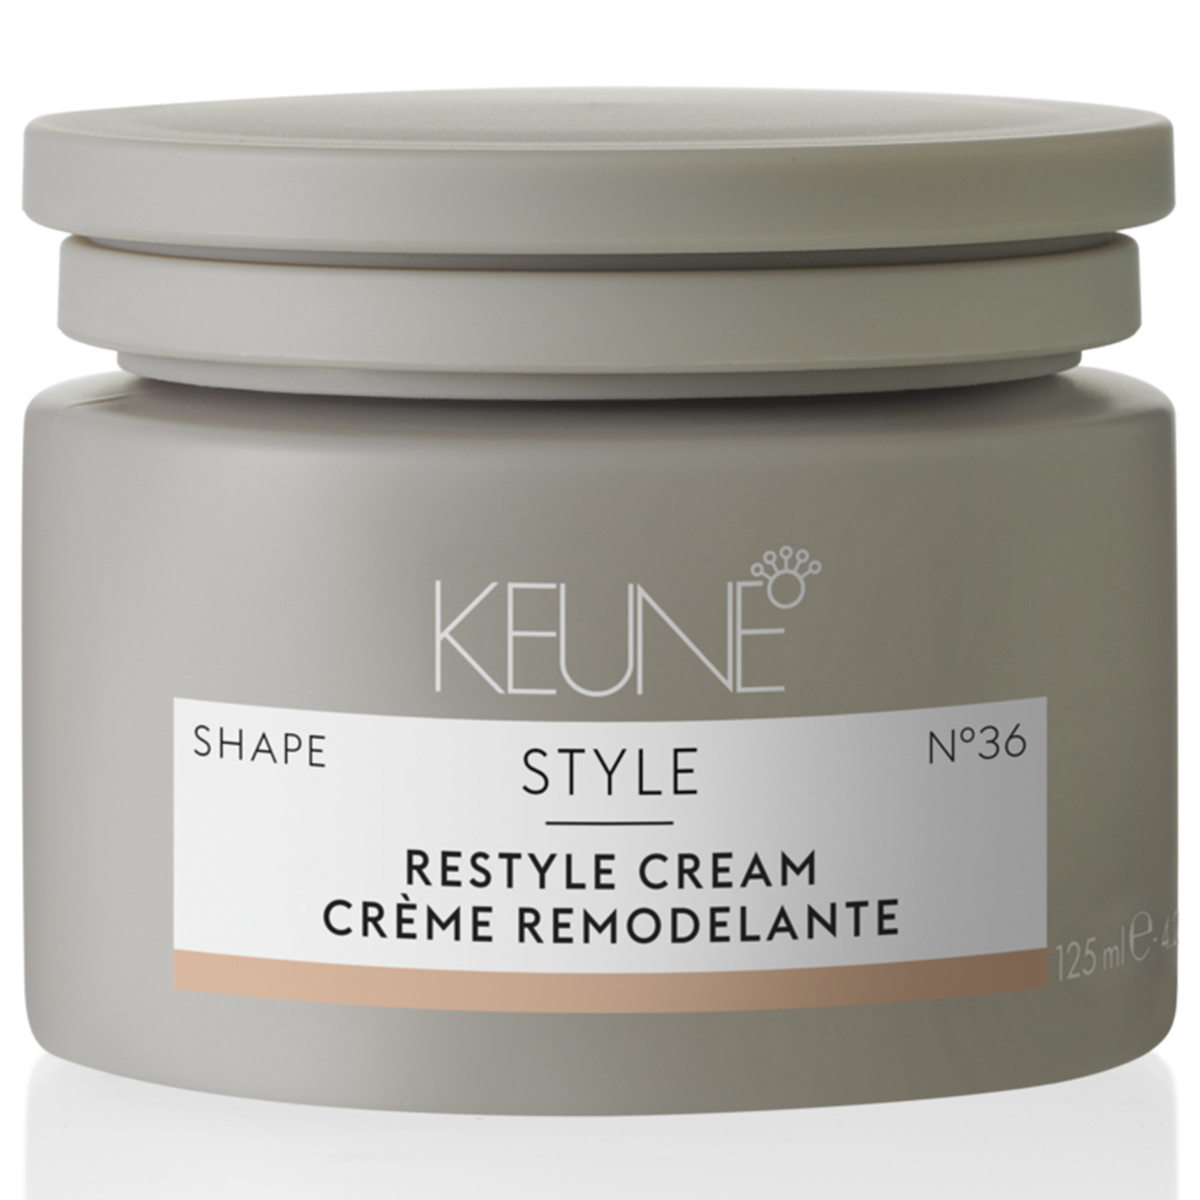 Keune Крем для рестайлинга Restyle Cream №36, 125 мл (Keune, Style) цена и фото